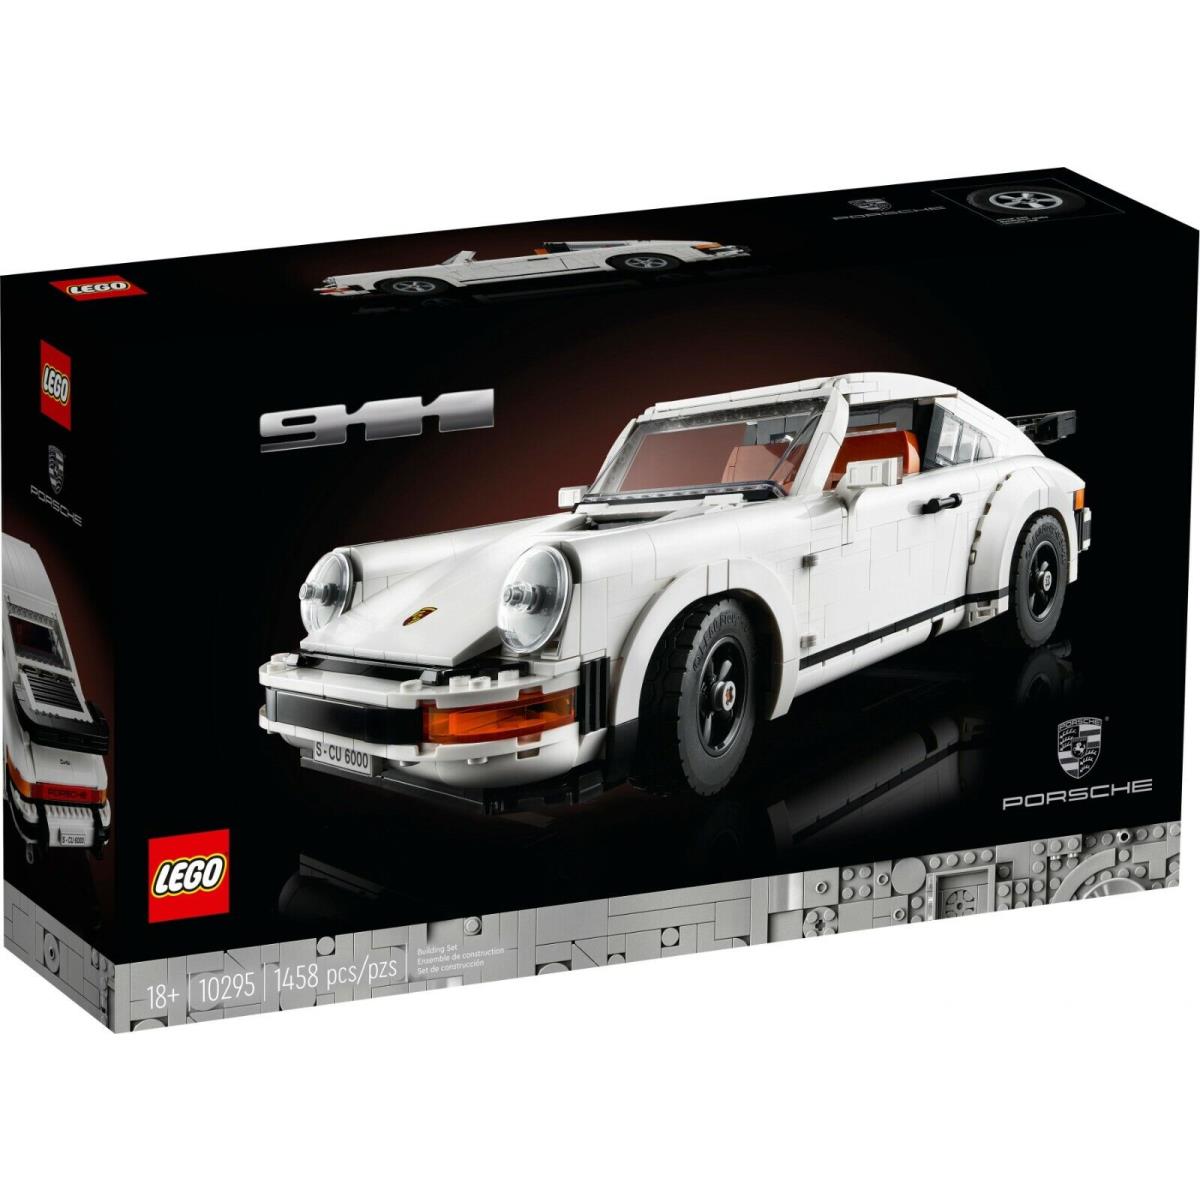 Lego 10295 Creator Porsche 911 Box 1458 Pcs. Vip Exclusive